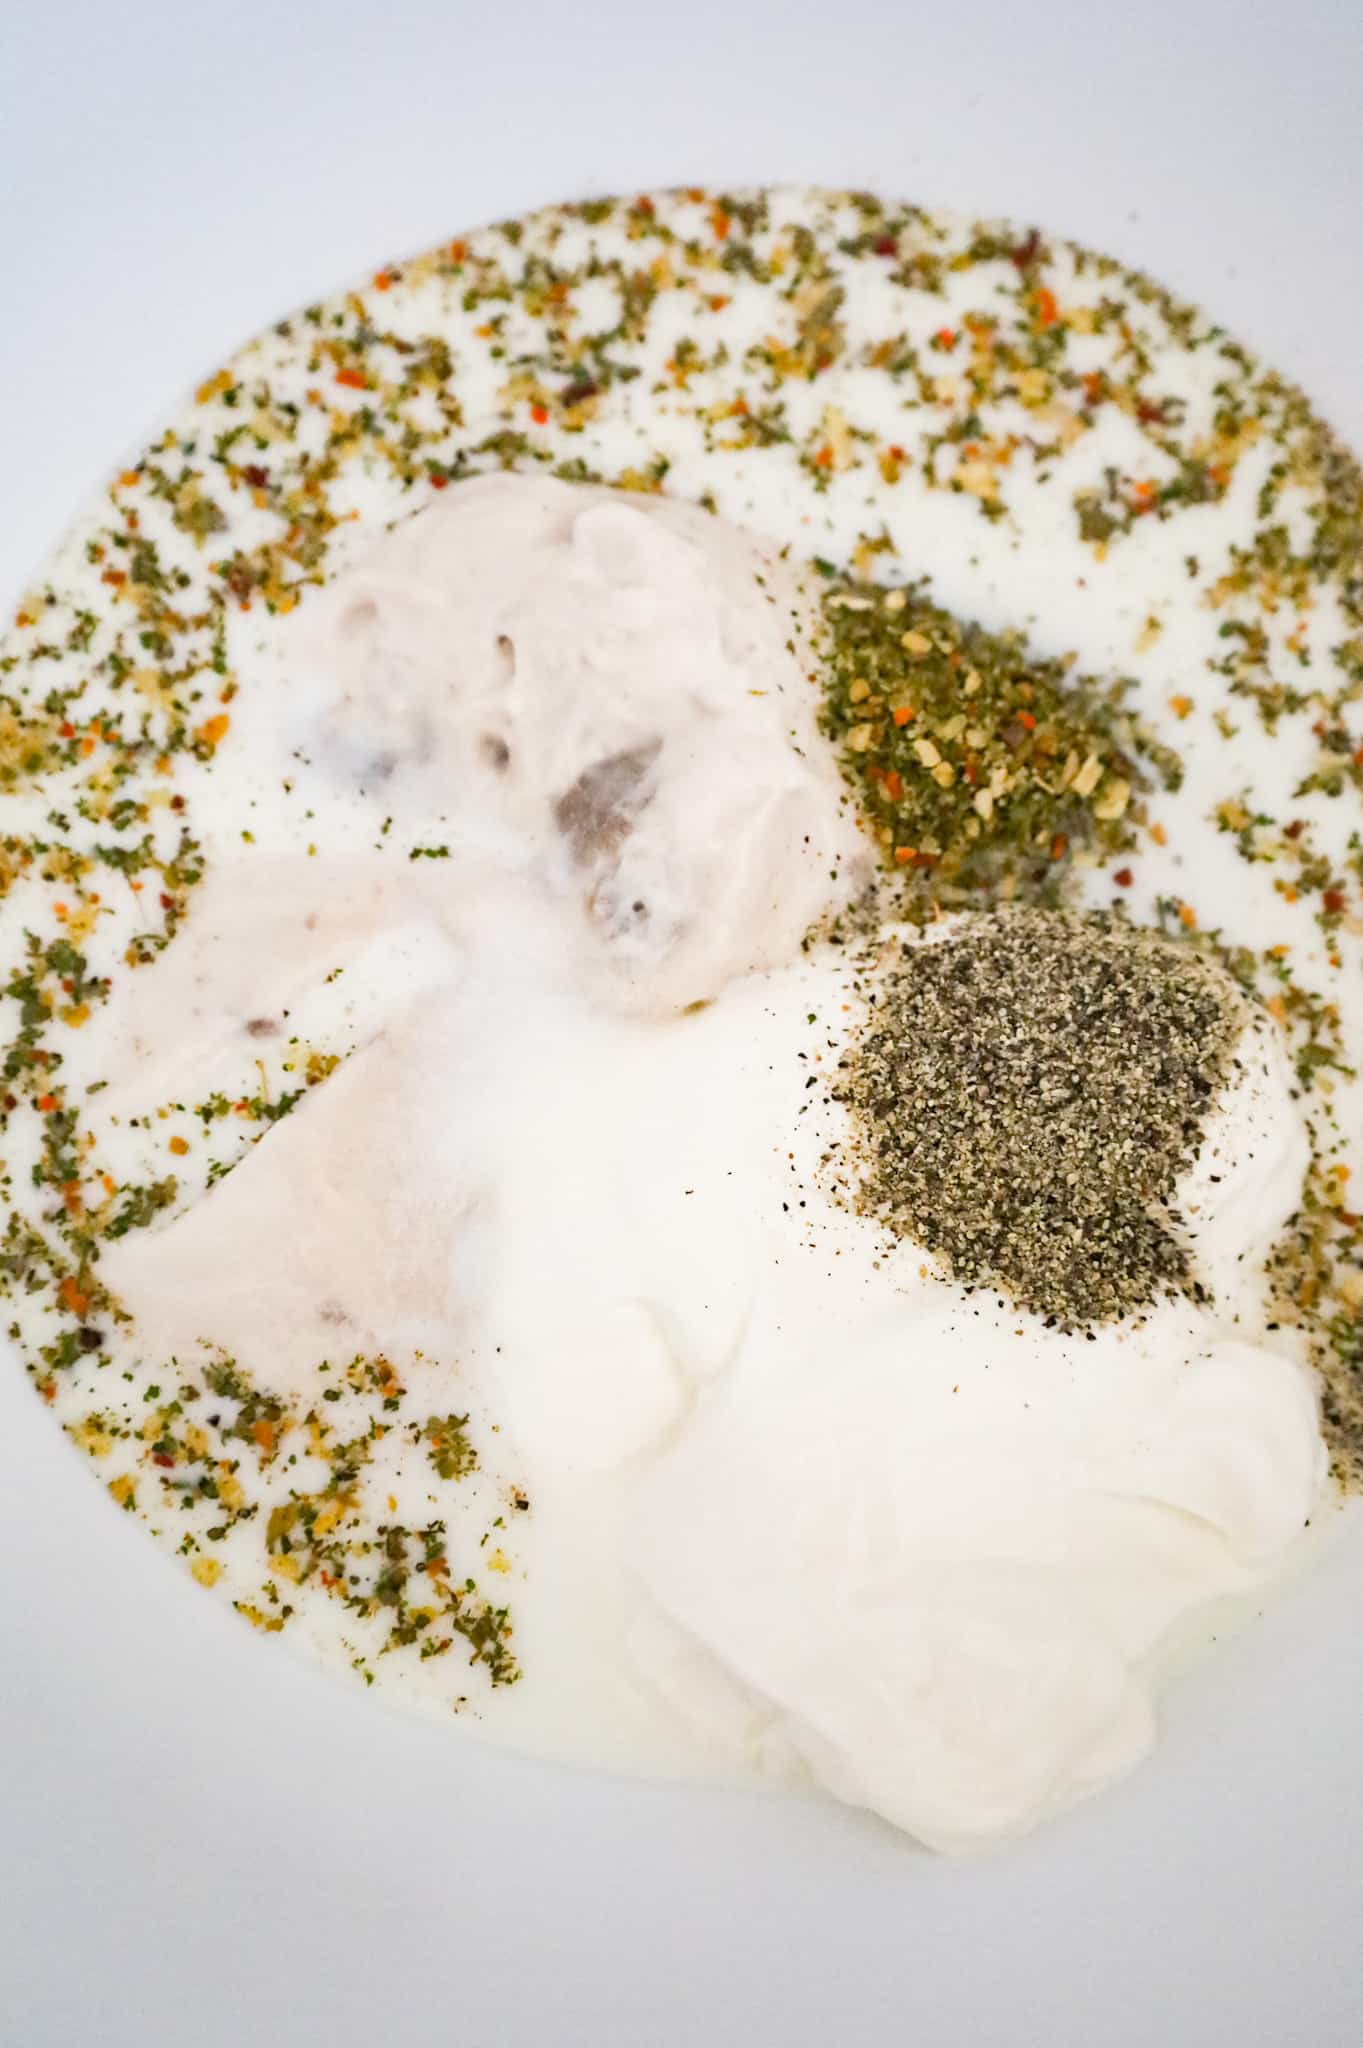 Italian seasoning, salt, pepper, sour cream, milk and cream of mushroom soup in a mixing bowl